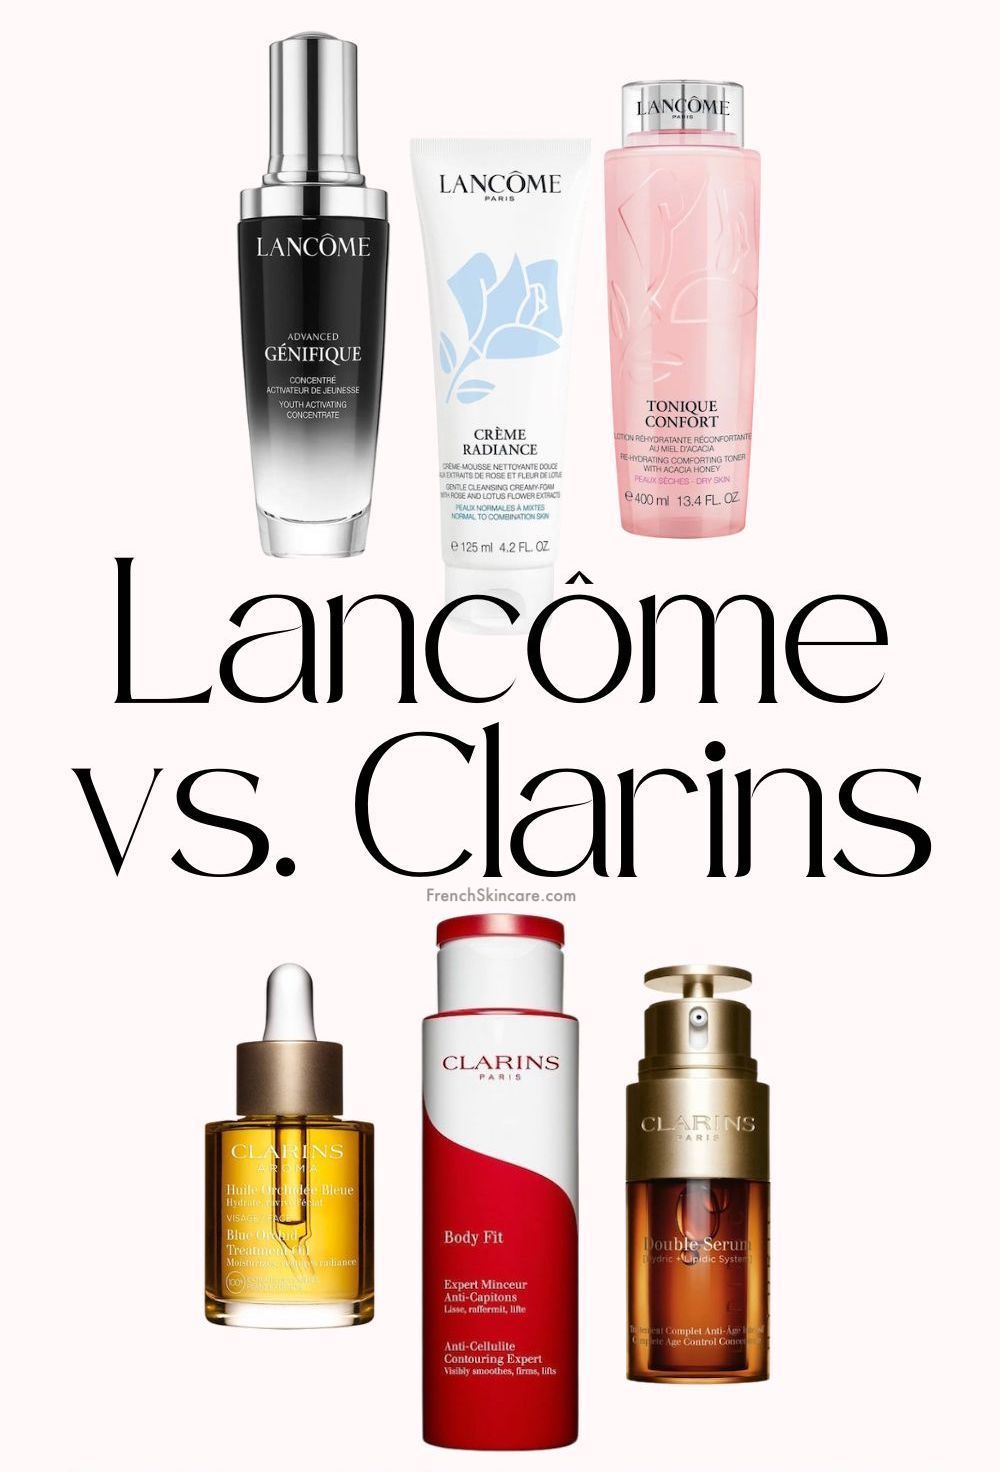 Lancome vs Clarins skincare